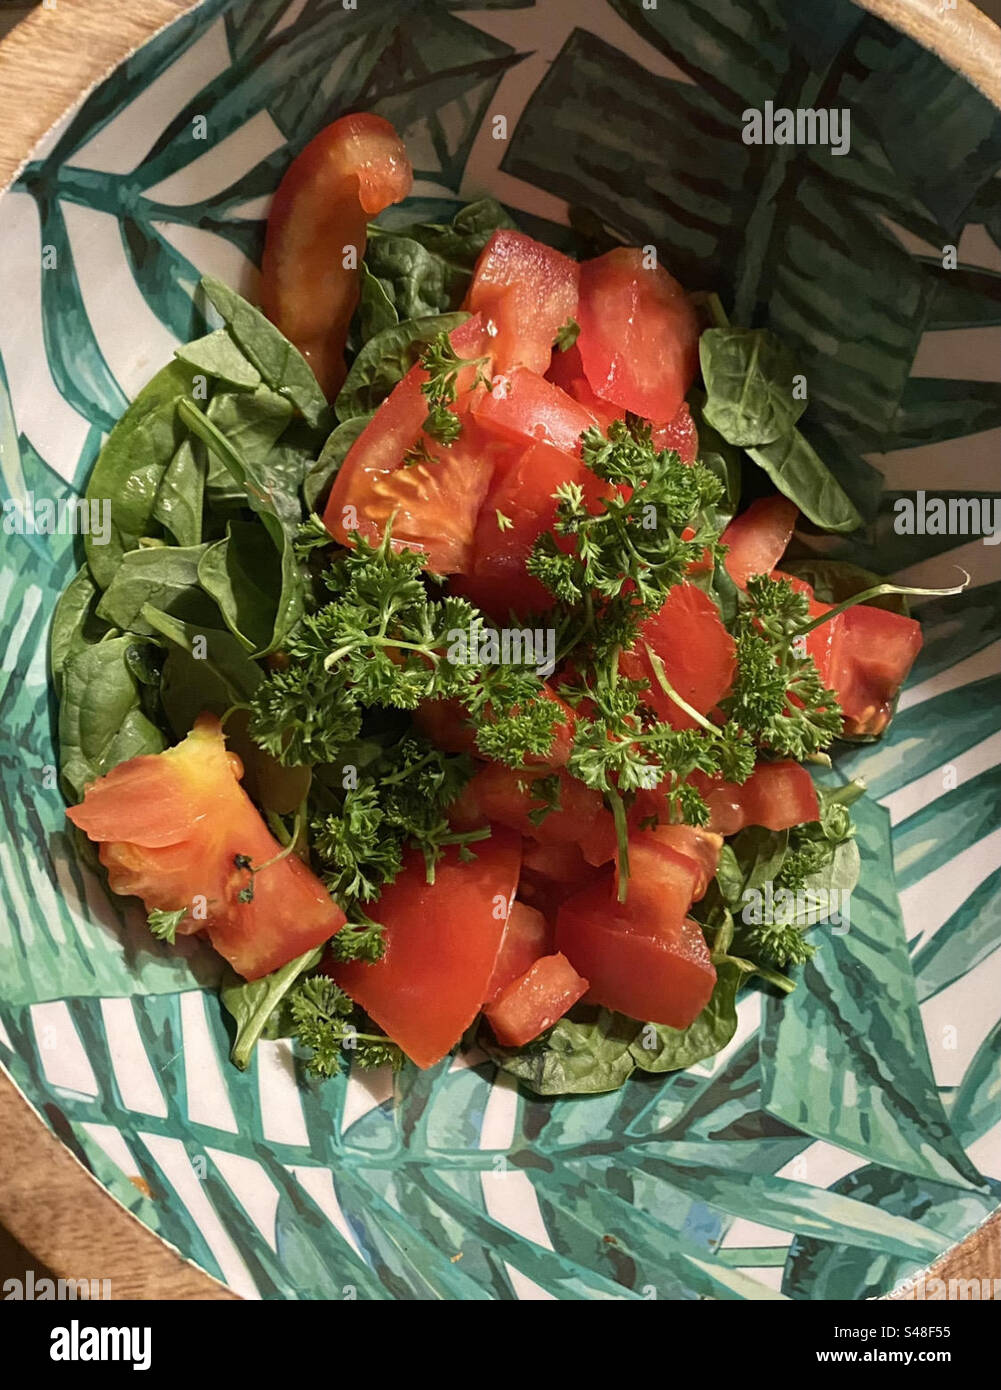 Tomato salad in decorative bowl Stock Photo